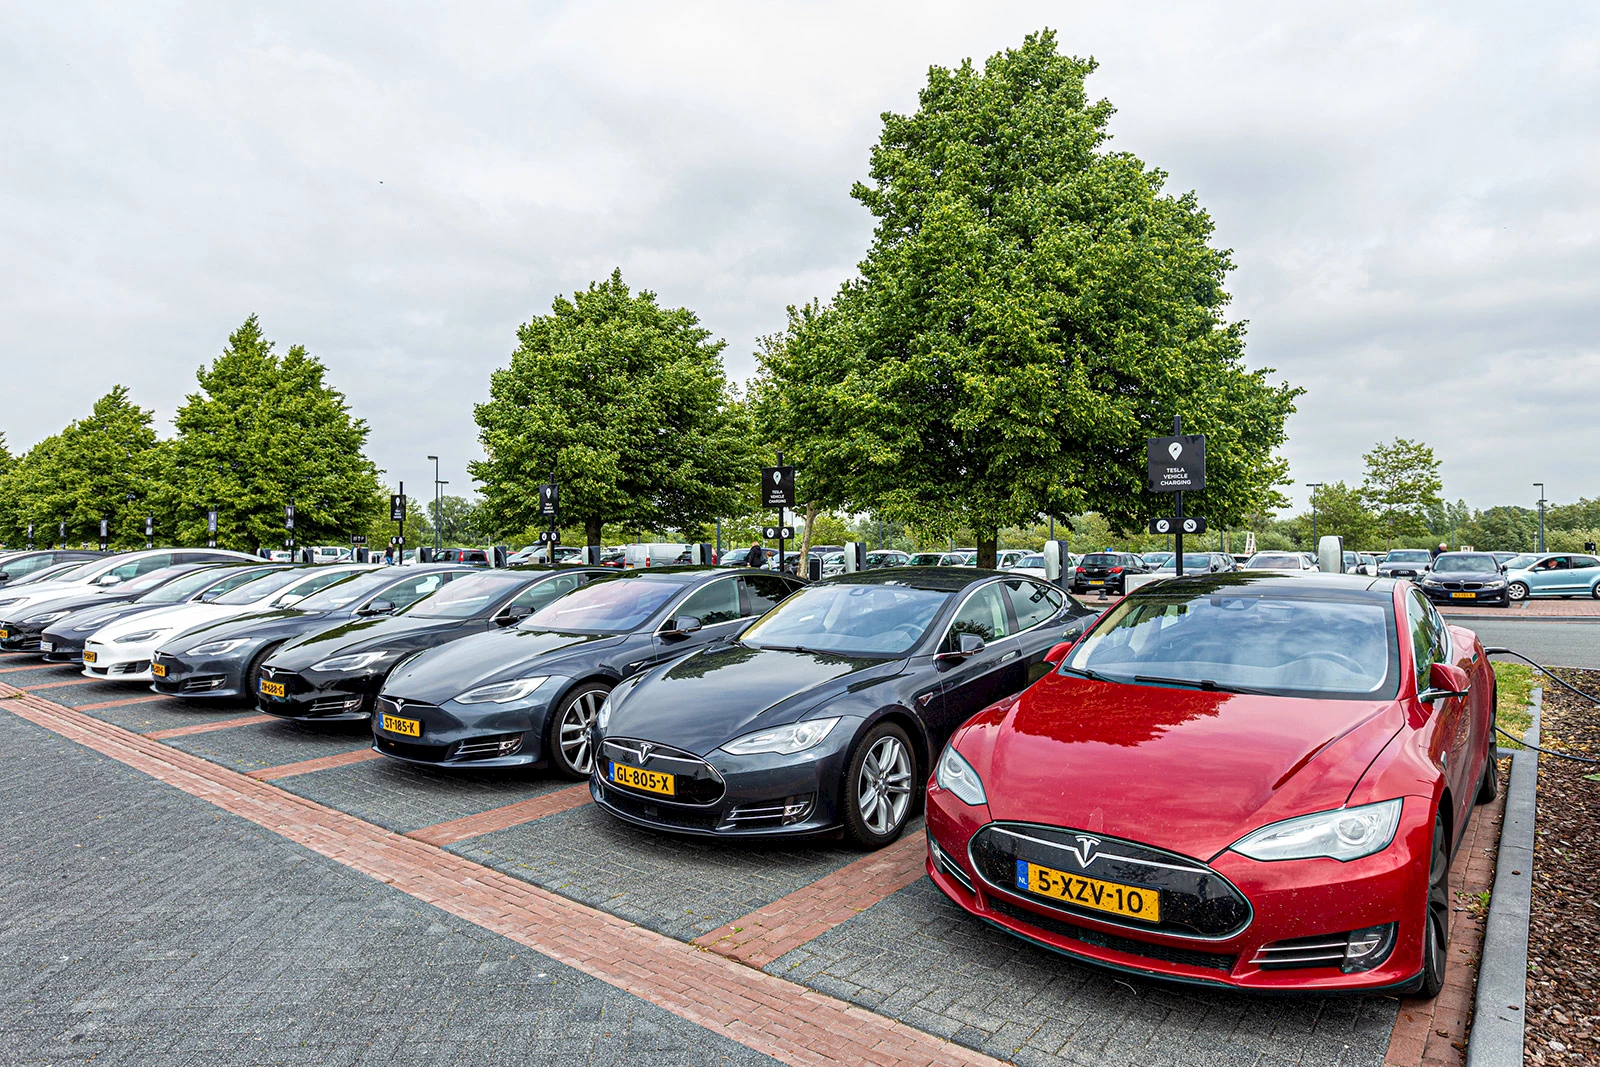 Tesla cars on a parking lot in Lelystad, Netherlands.